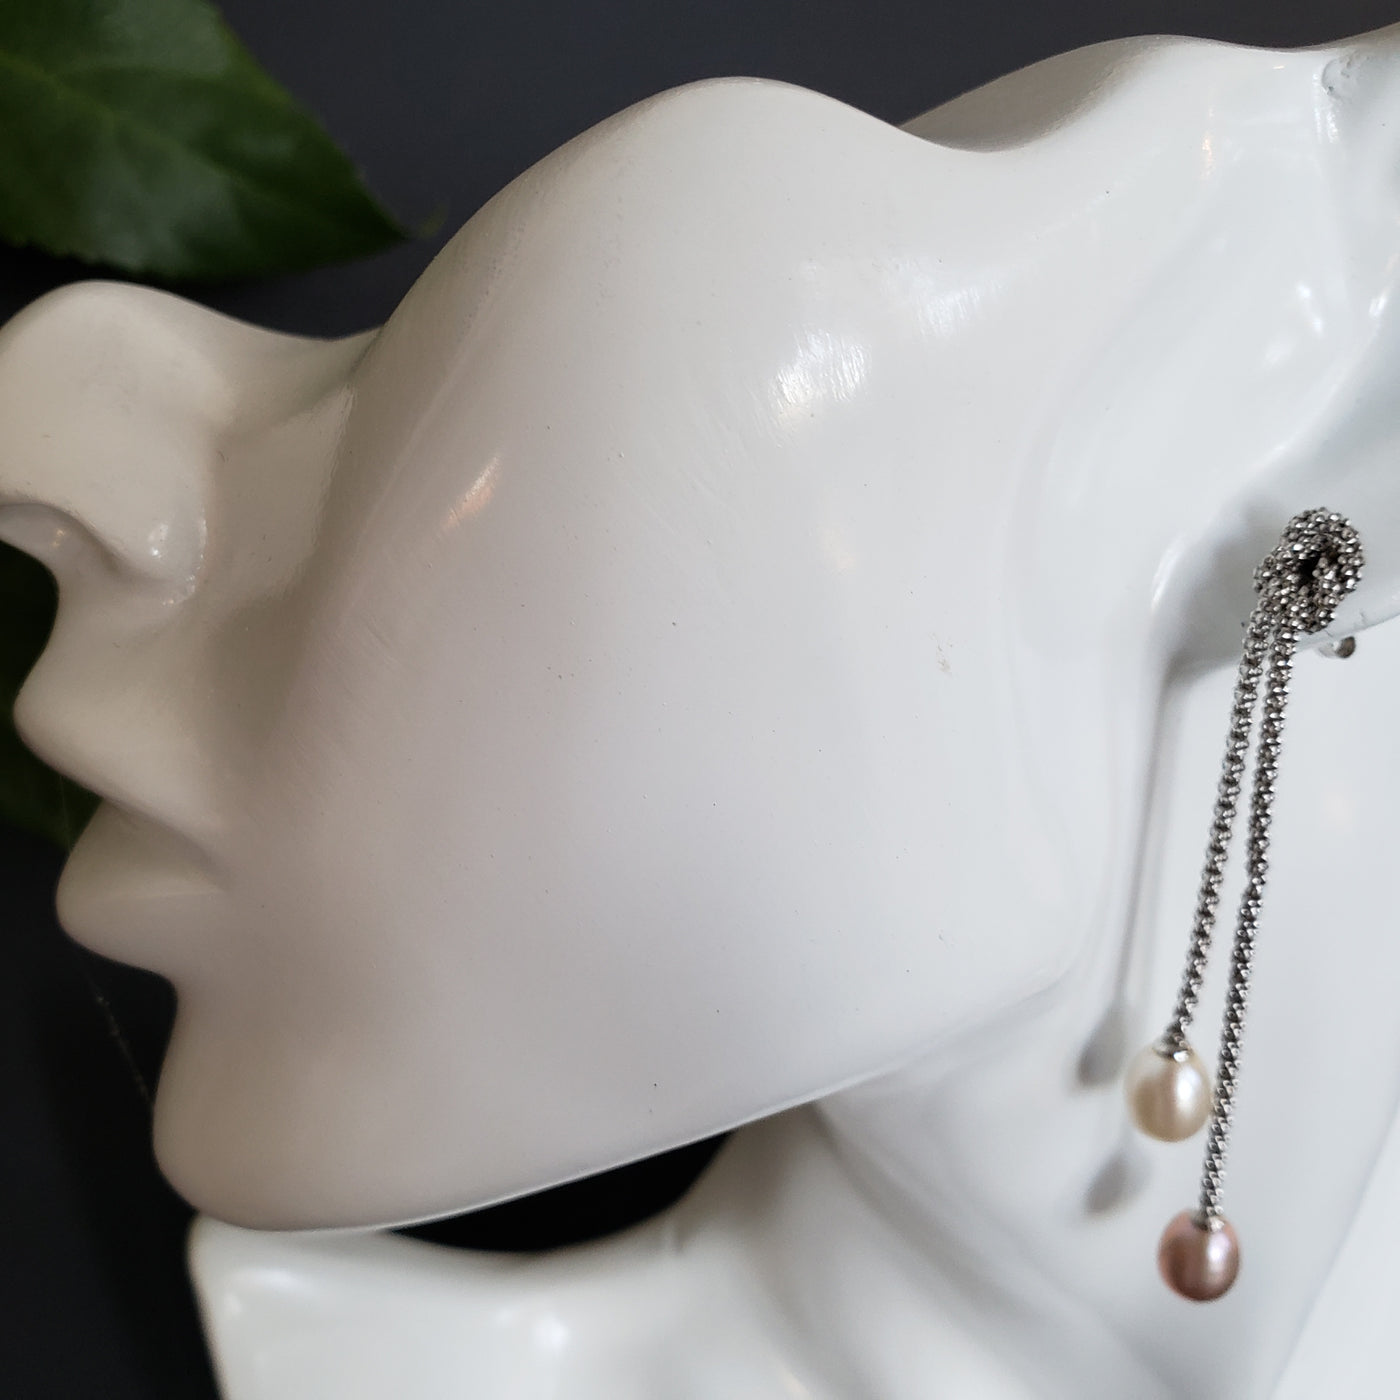 Pearl Braid dangle earrings